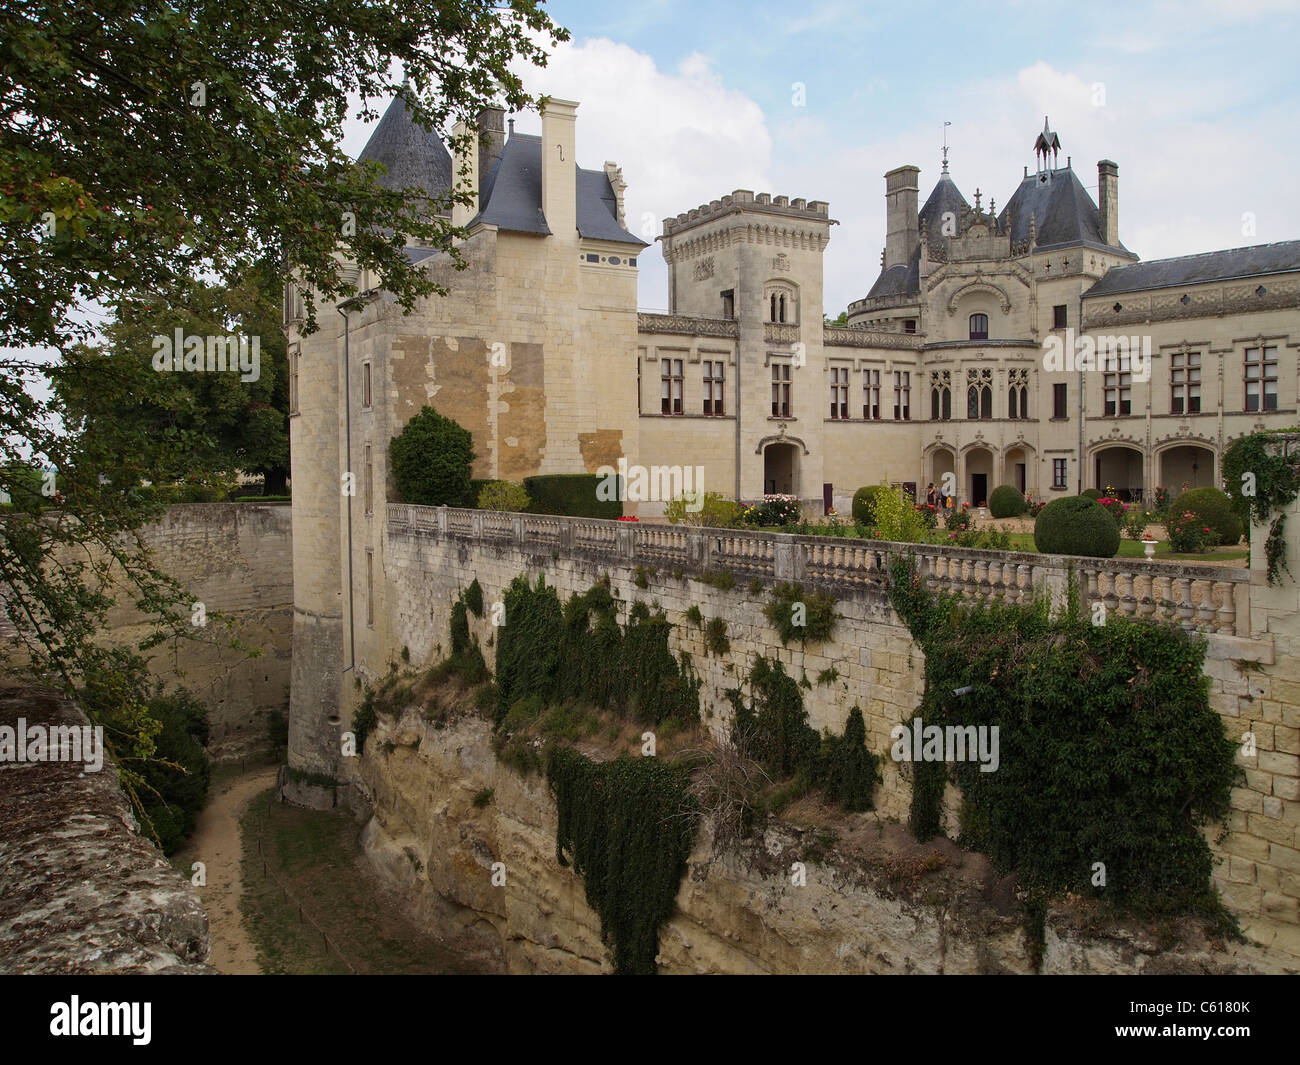 Chateau de Breze tiene una extremadamente profundo foso seco. El valle del Loira, Francia Foto de stock